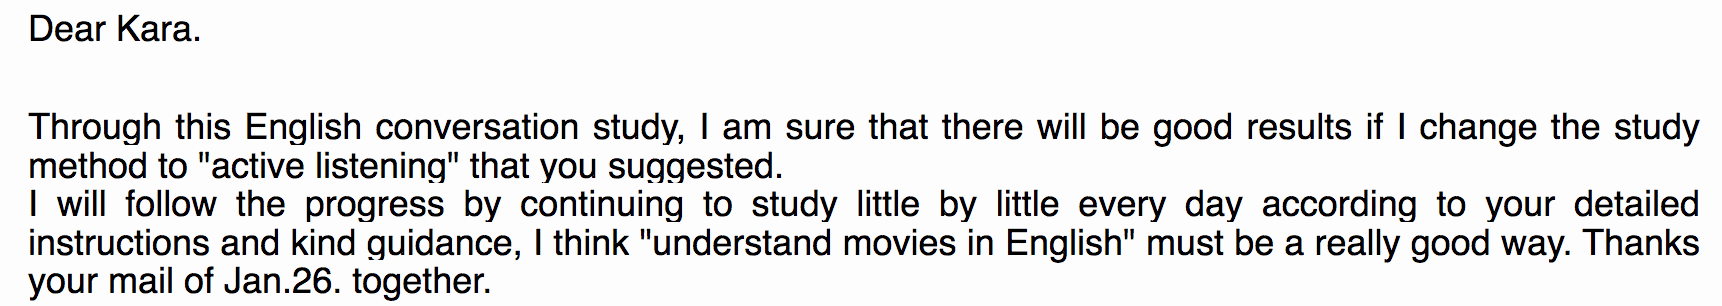 Testimonial understand movies in English